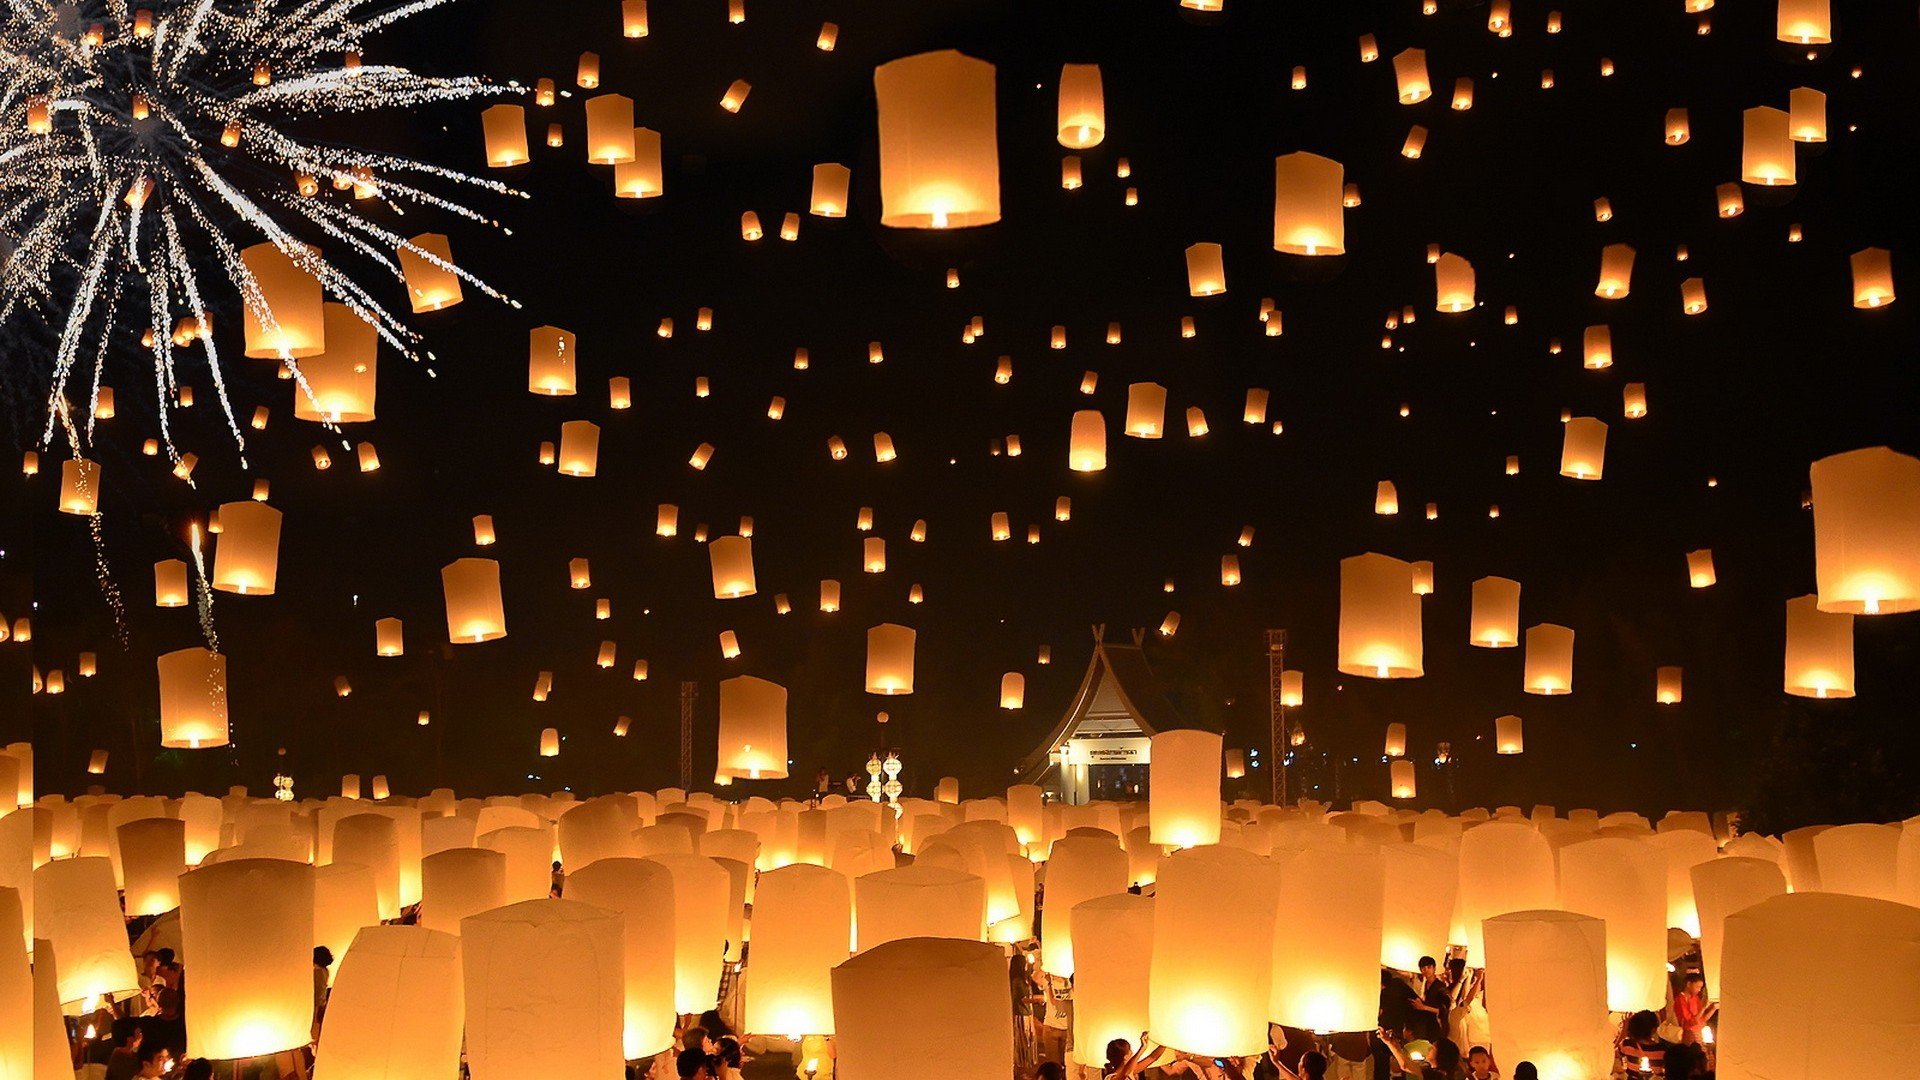 night, People, Crowds, Floating, Lantern, Lantern Festival, Candles, Thailand, Fireworks, House Wallpaper